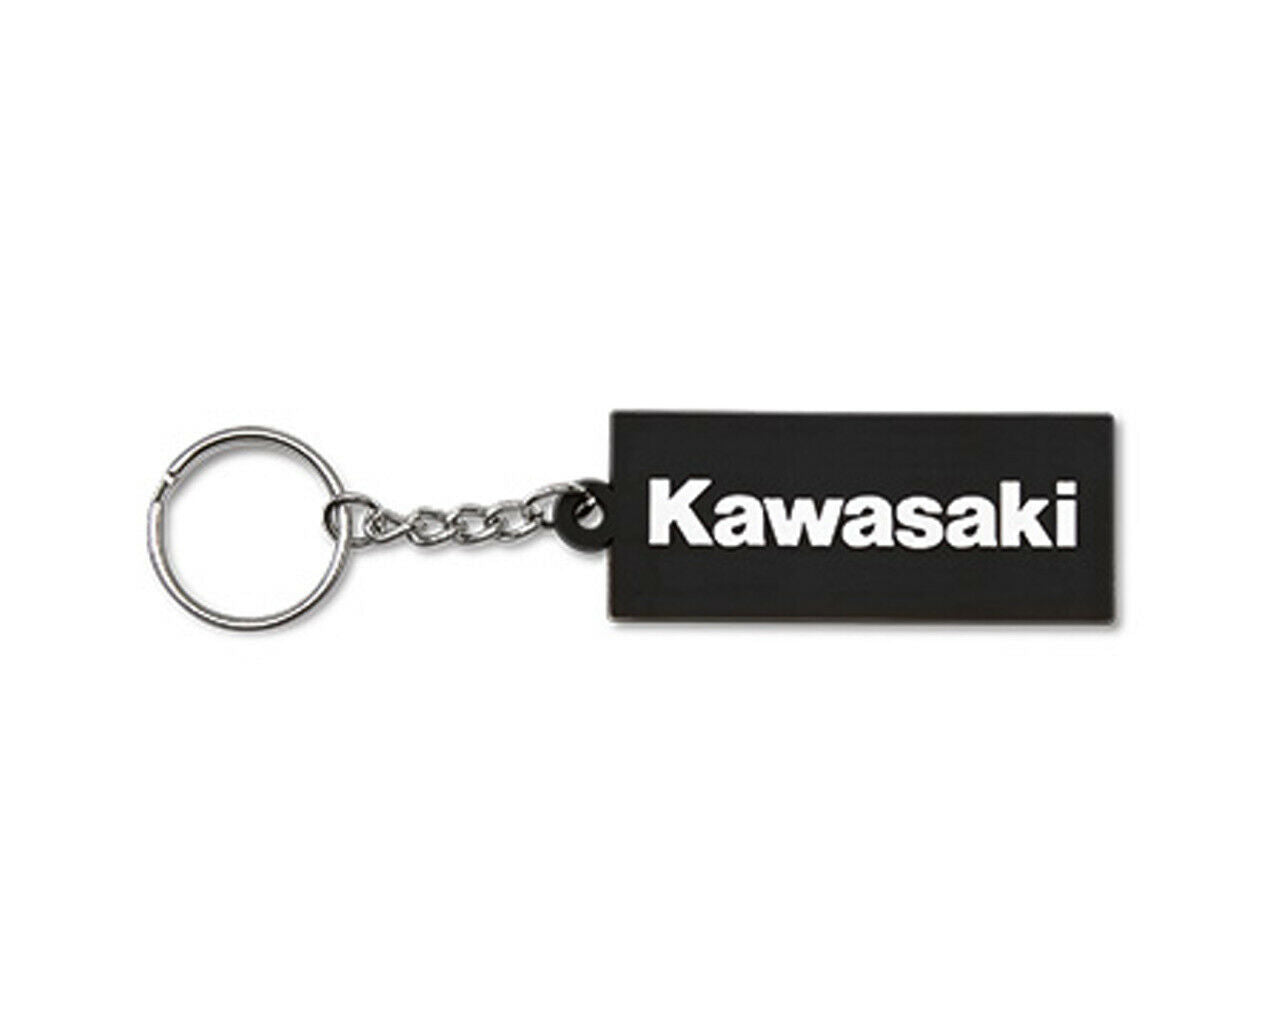 Kawasaki Rubber 3D Raised Black Key Fob 2 1/2" x 1" PVC